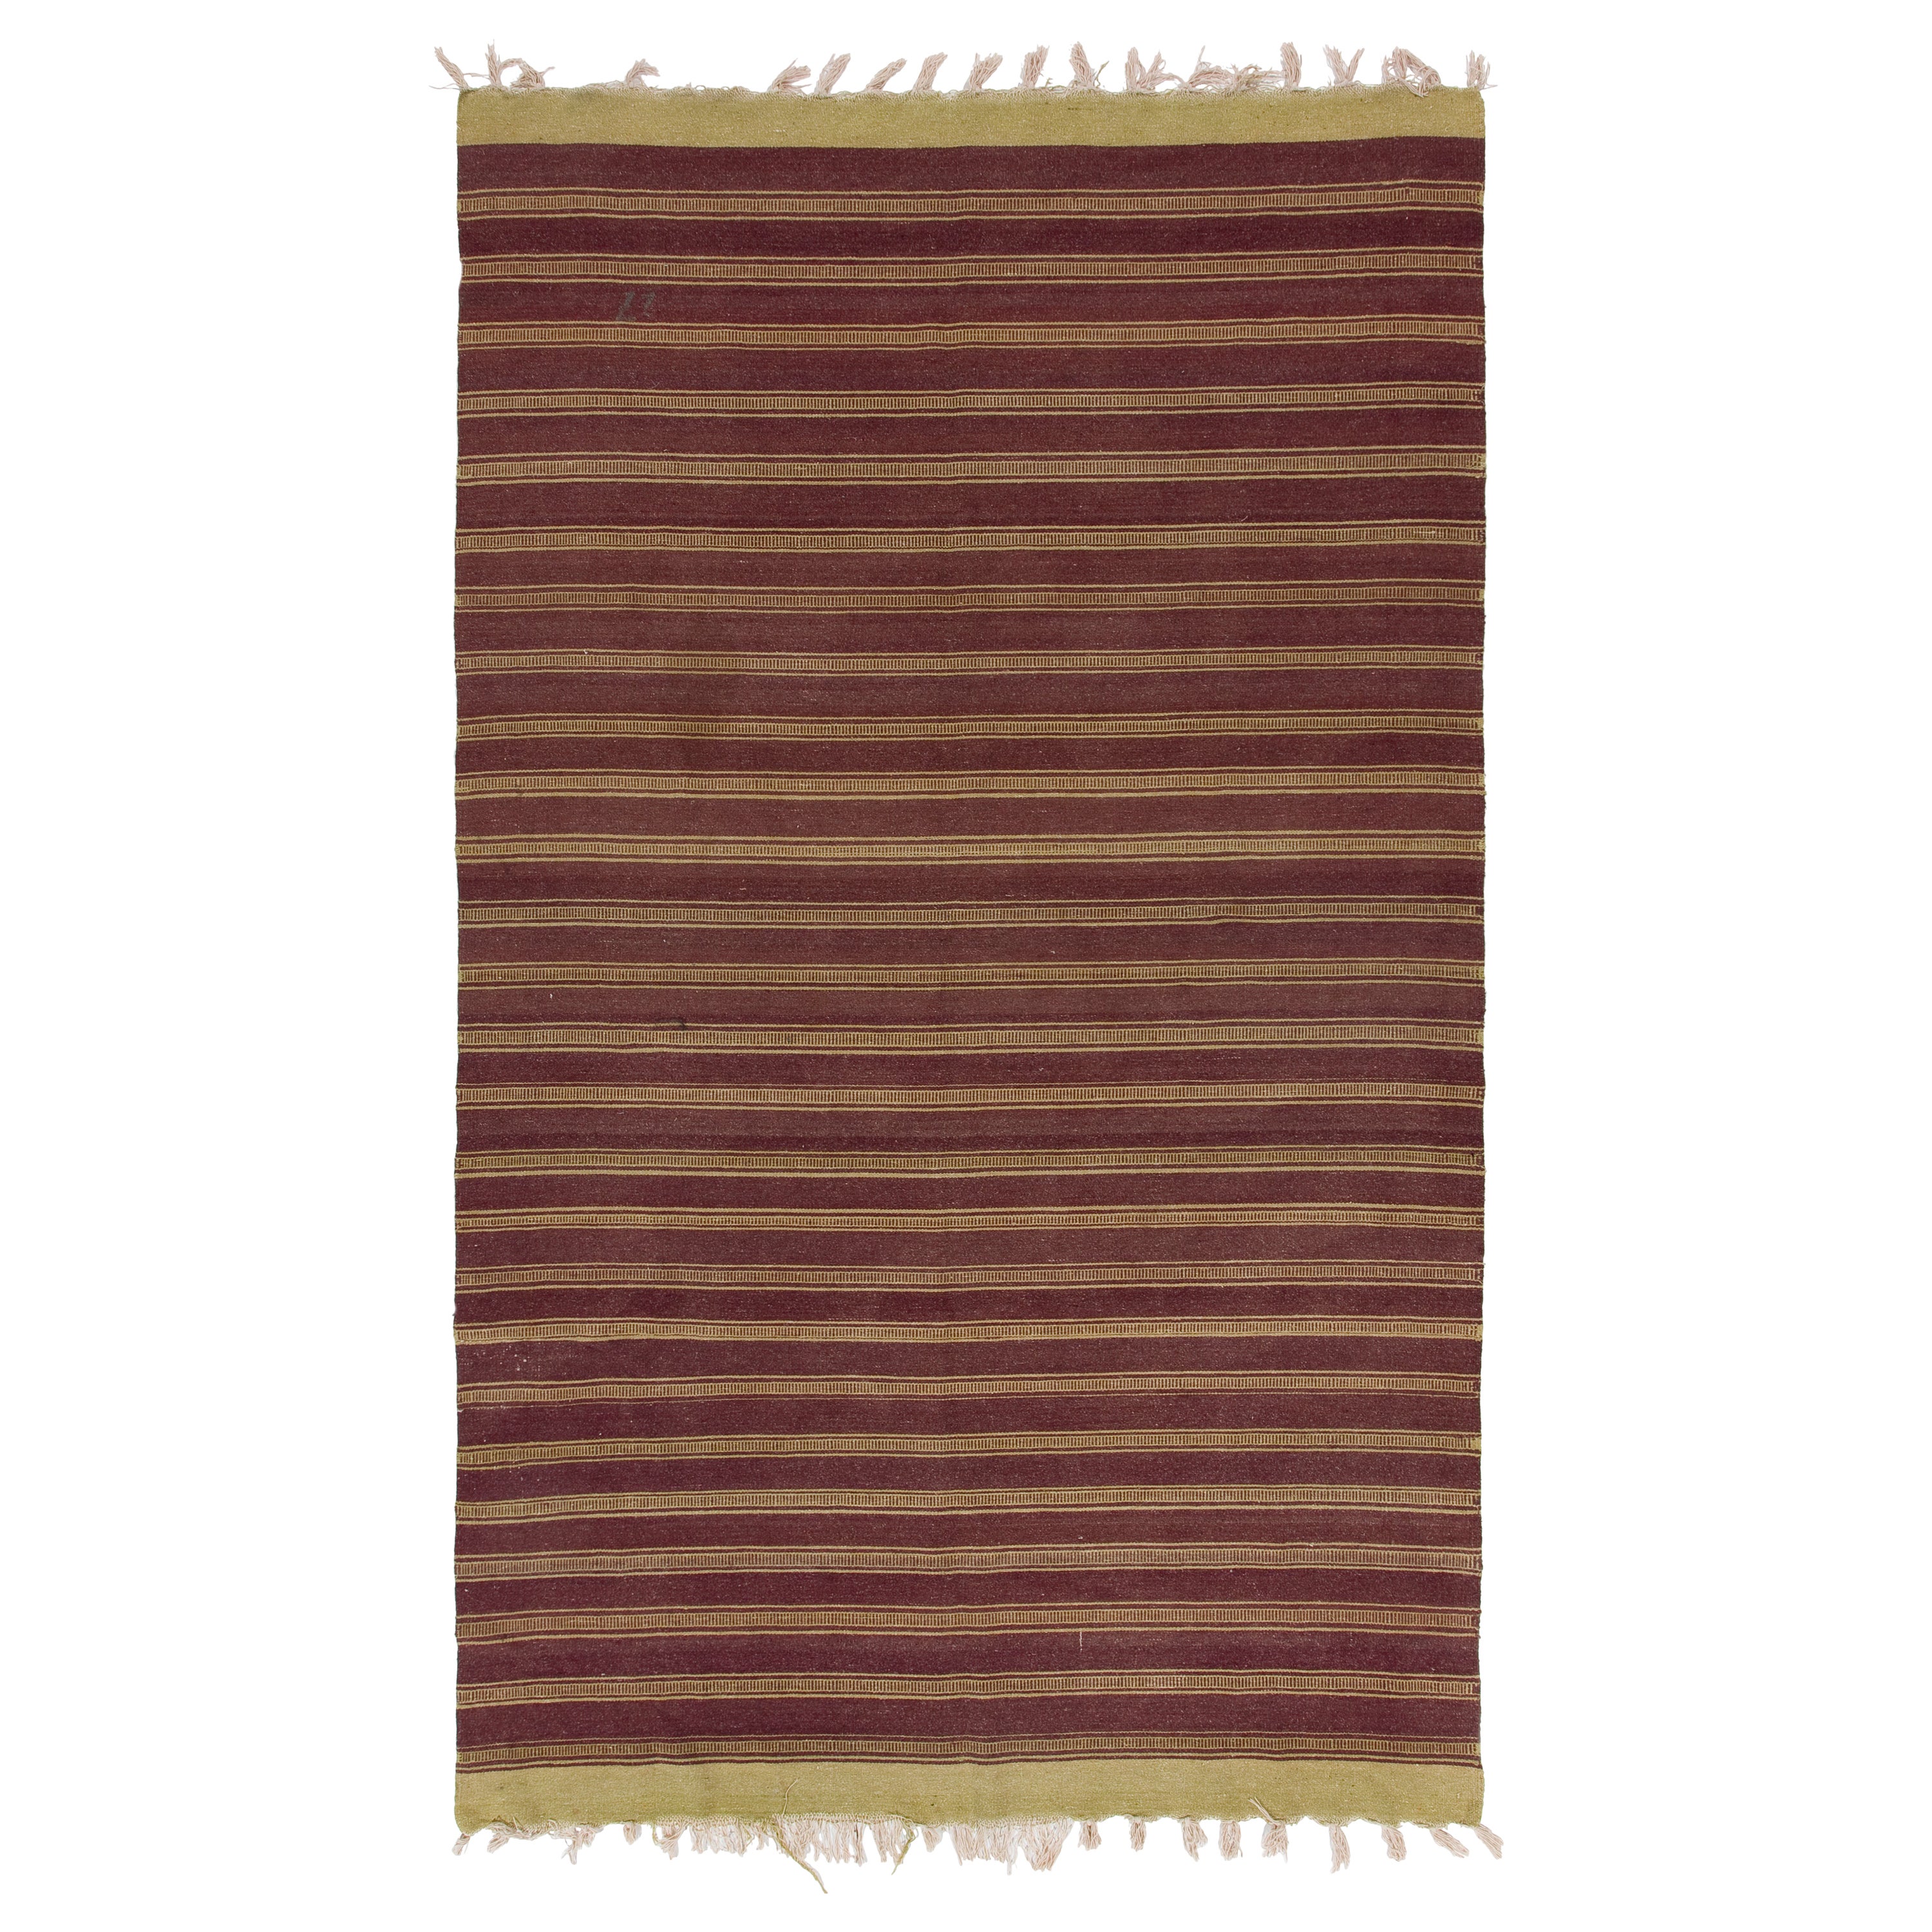 5.6x9 Ft Vintage Striped Handwoven Turkish Kilim 'Flat Weave', All Wool